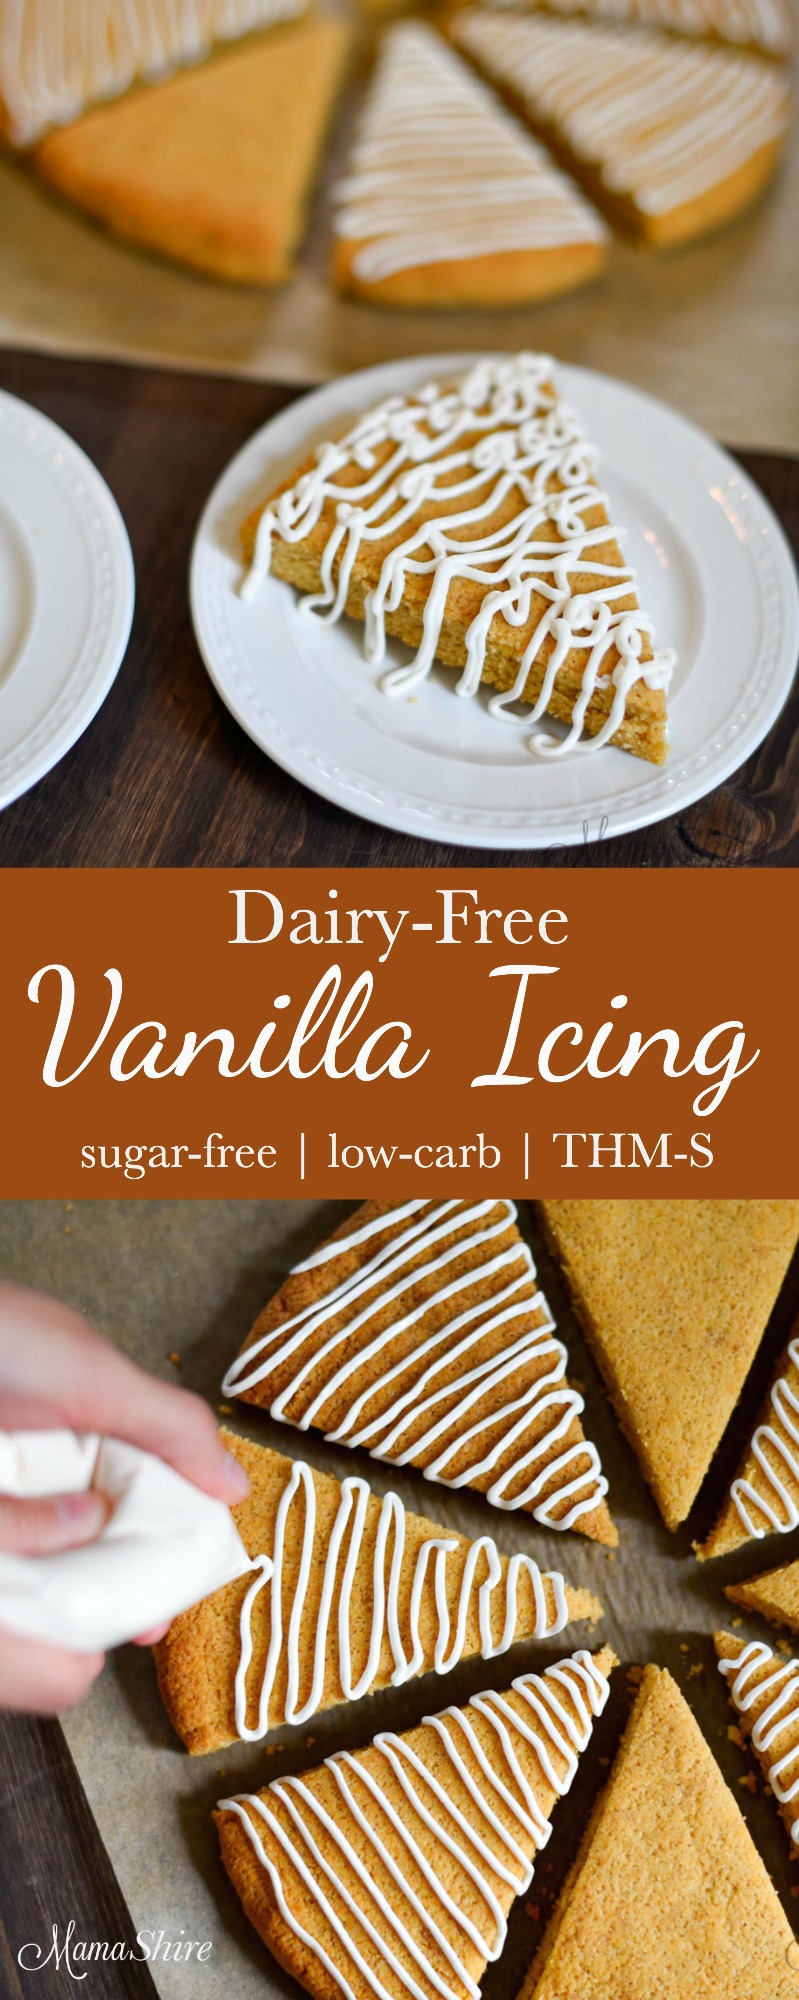 Dairy-Free Vanilla Scones - Sugar-free, Gluten-free, Low-carb, THM-S